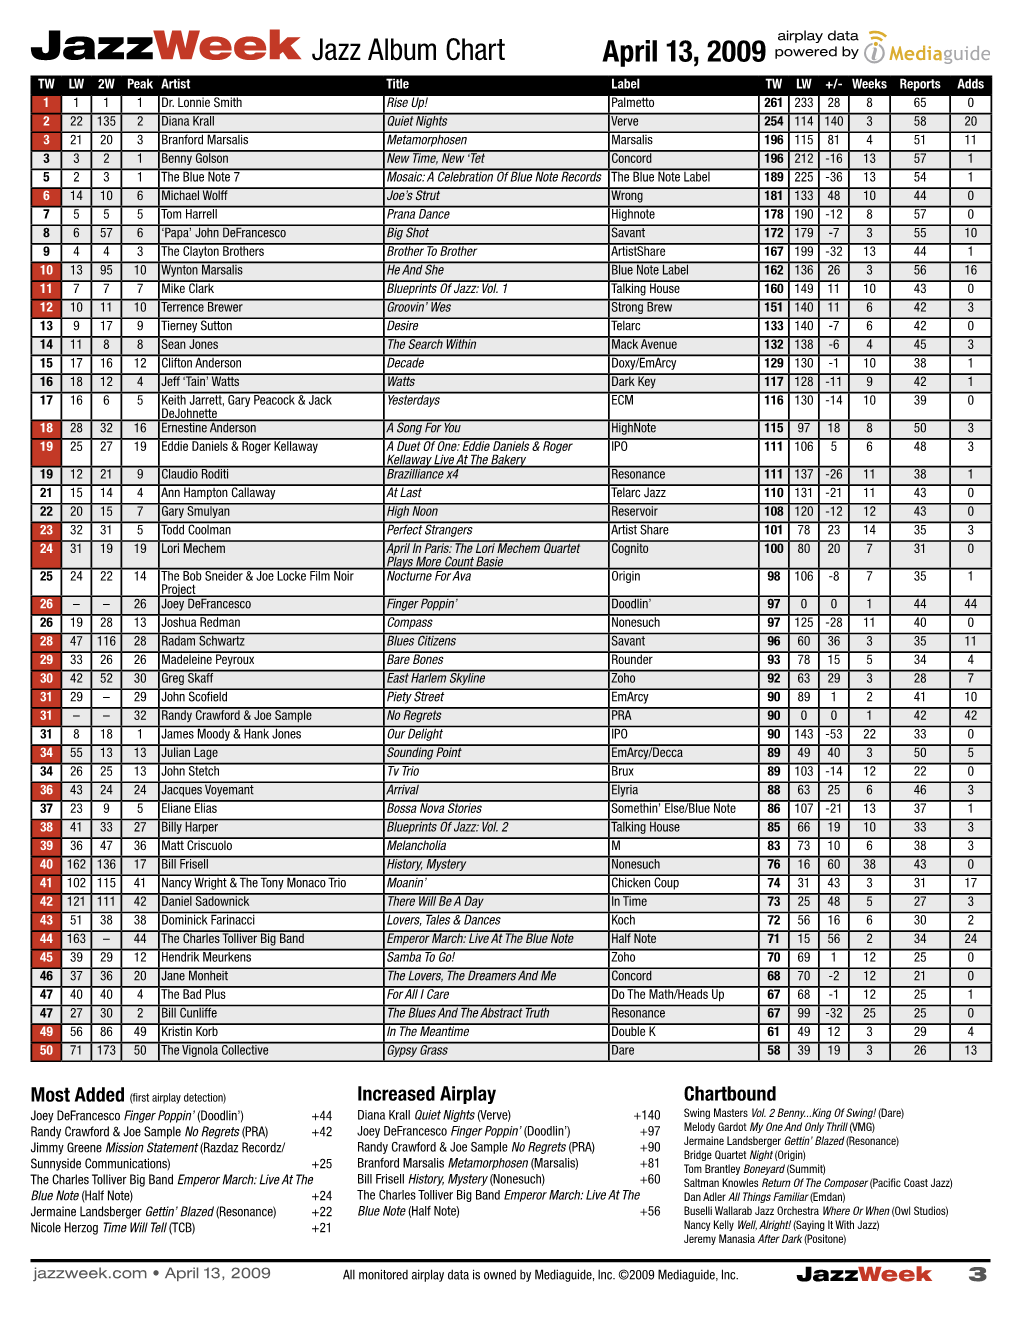 Jazzweek Jazz Album Chart April 13, 2009 Powered by TW LW 2W Peak Artist Title Label TW LW +/- Weeks Reports Adds 1 1 1 1 Dr